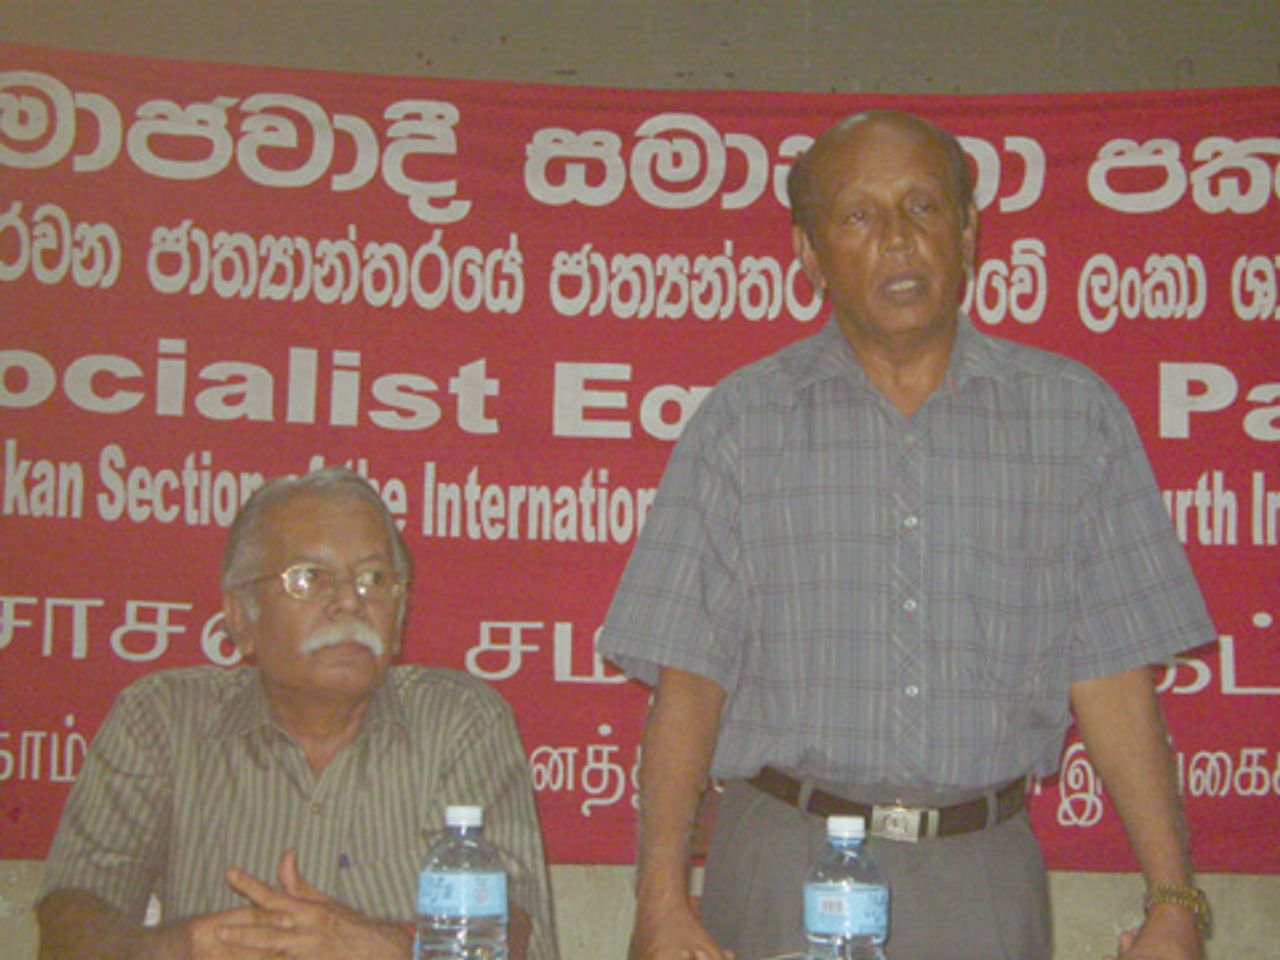 Ratnasiri Malalagama (speaking) alongside Wije Dias